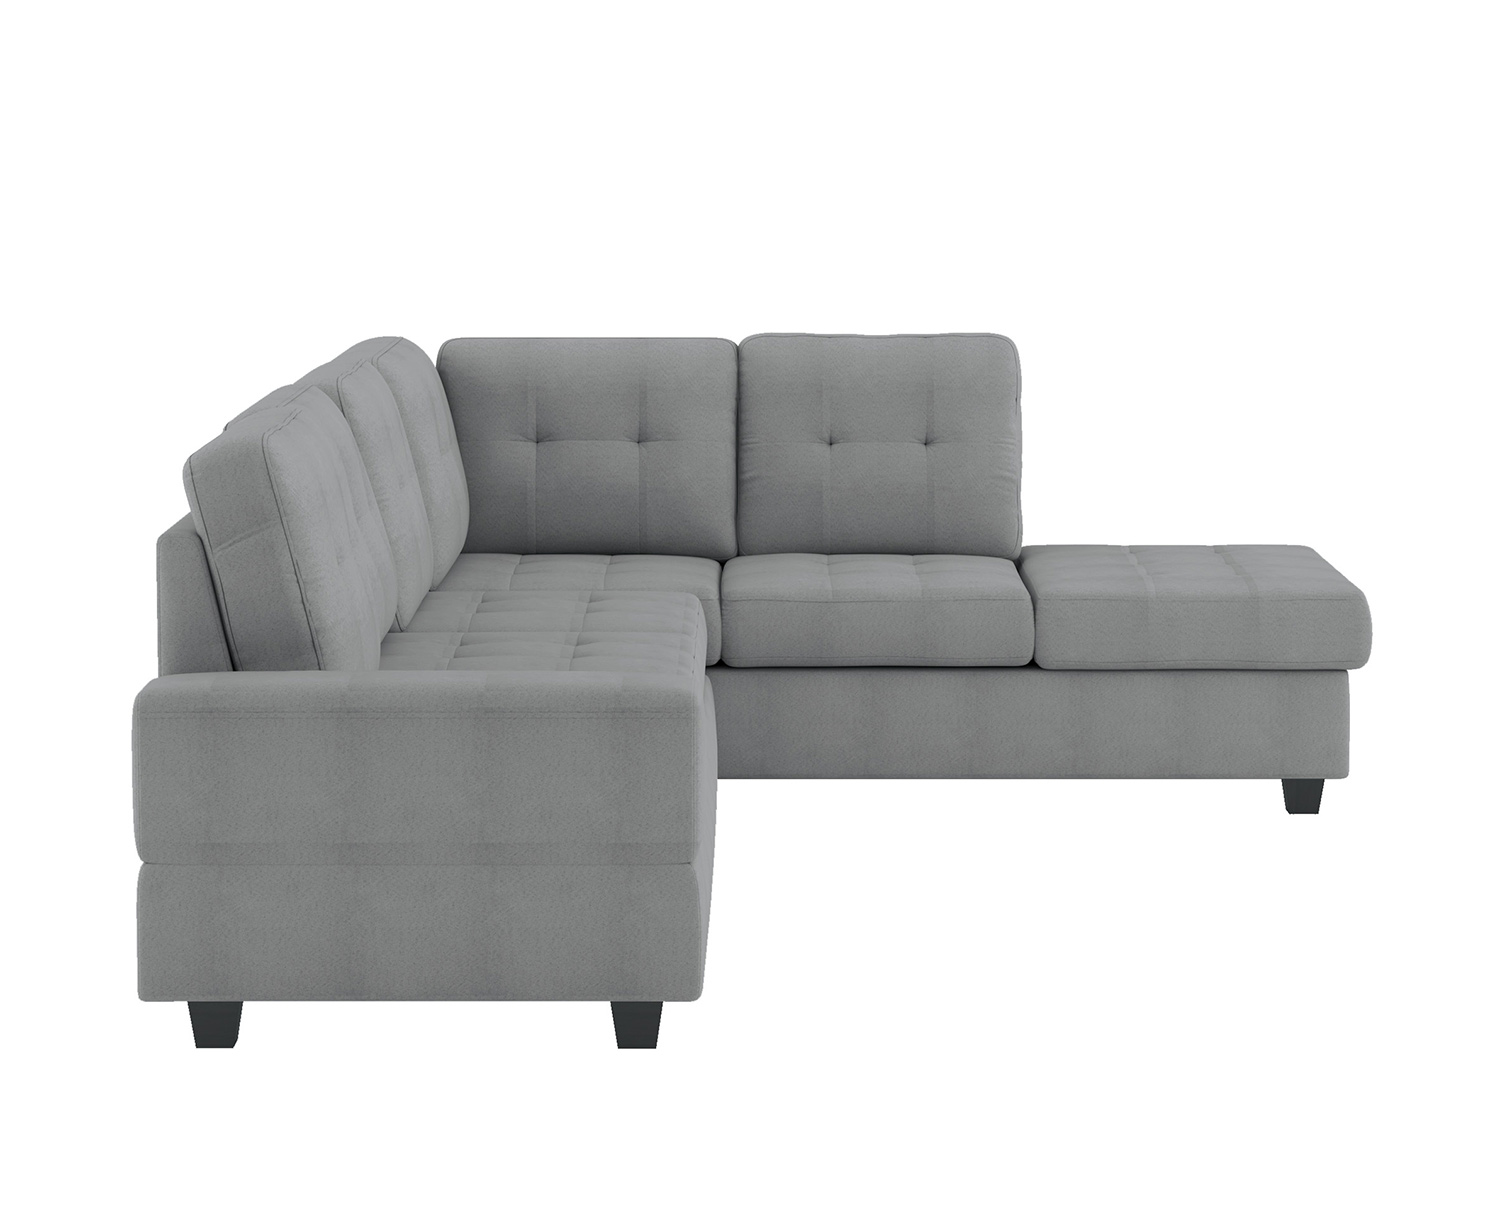 Homelegance Maston Sectional Sofa Set - Light gray